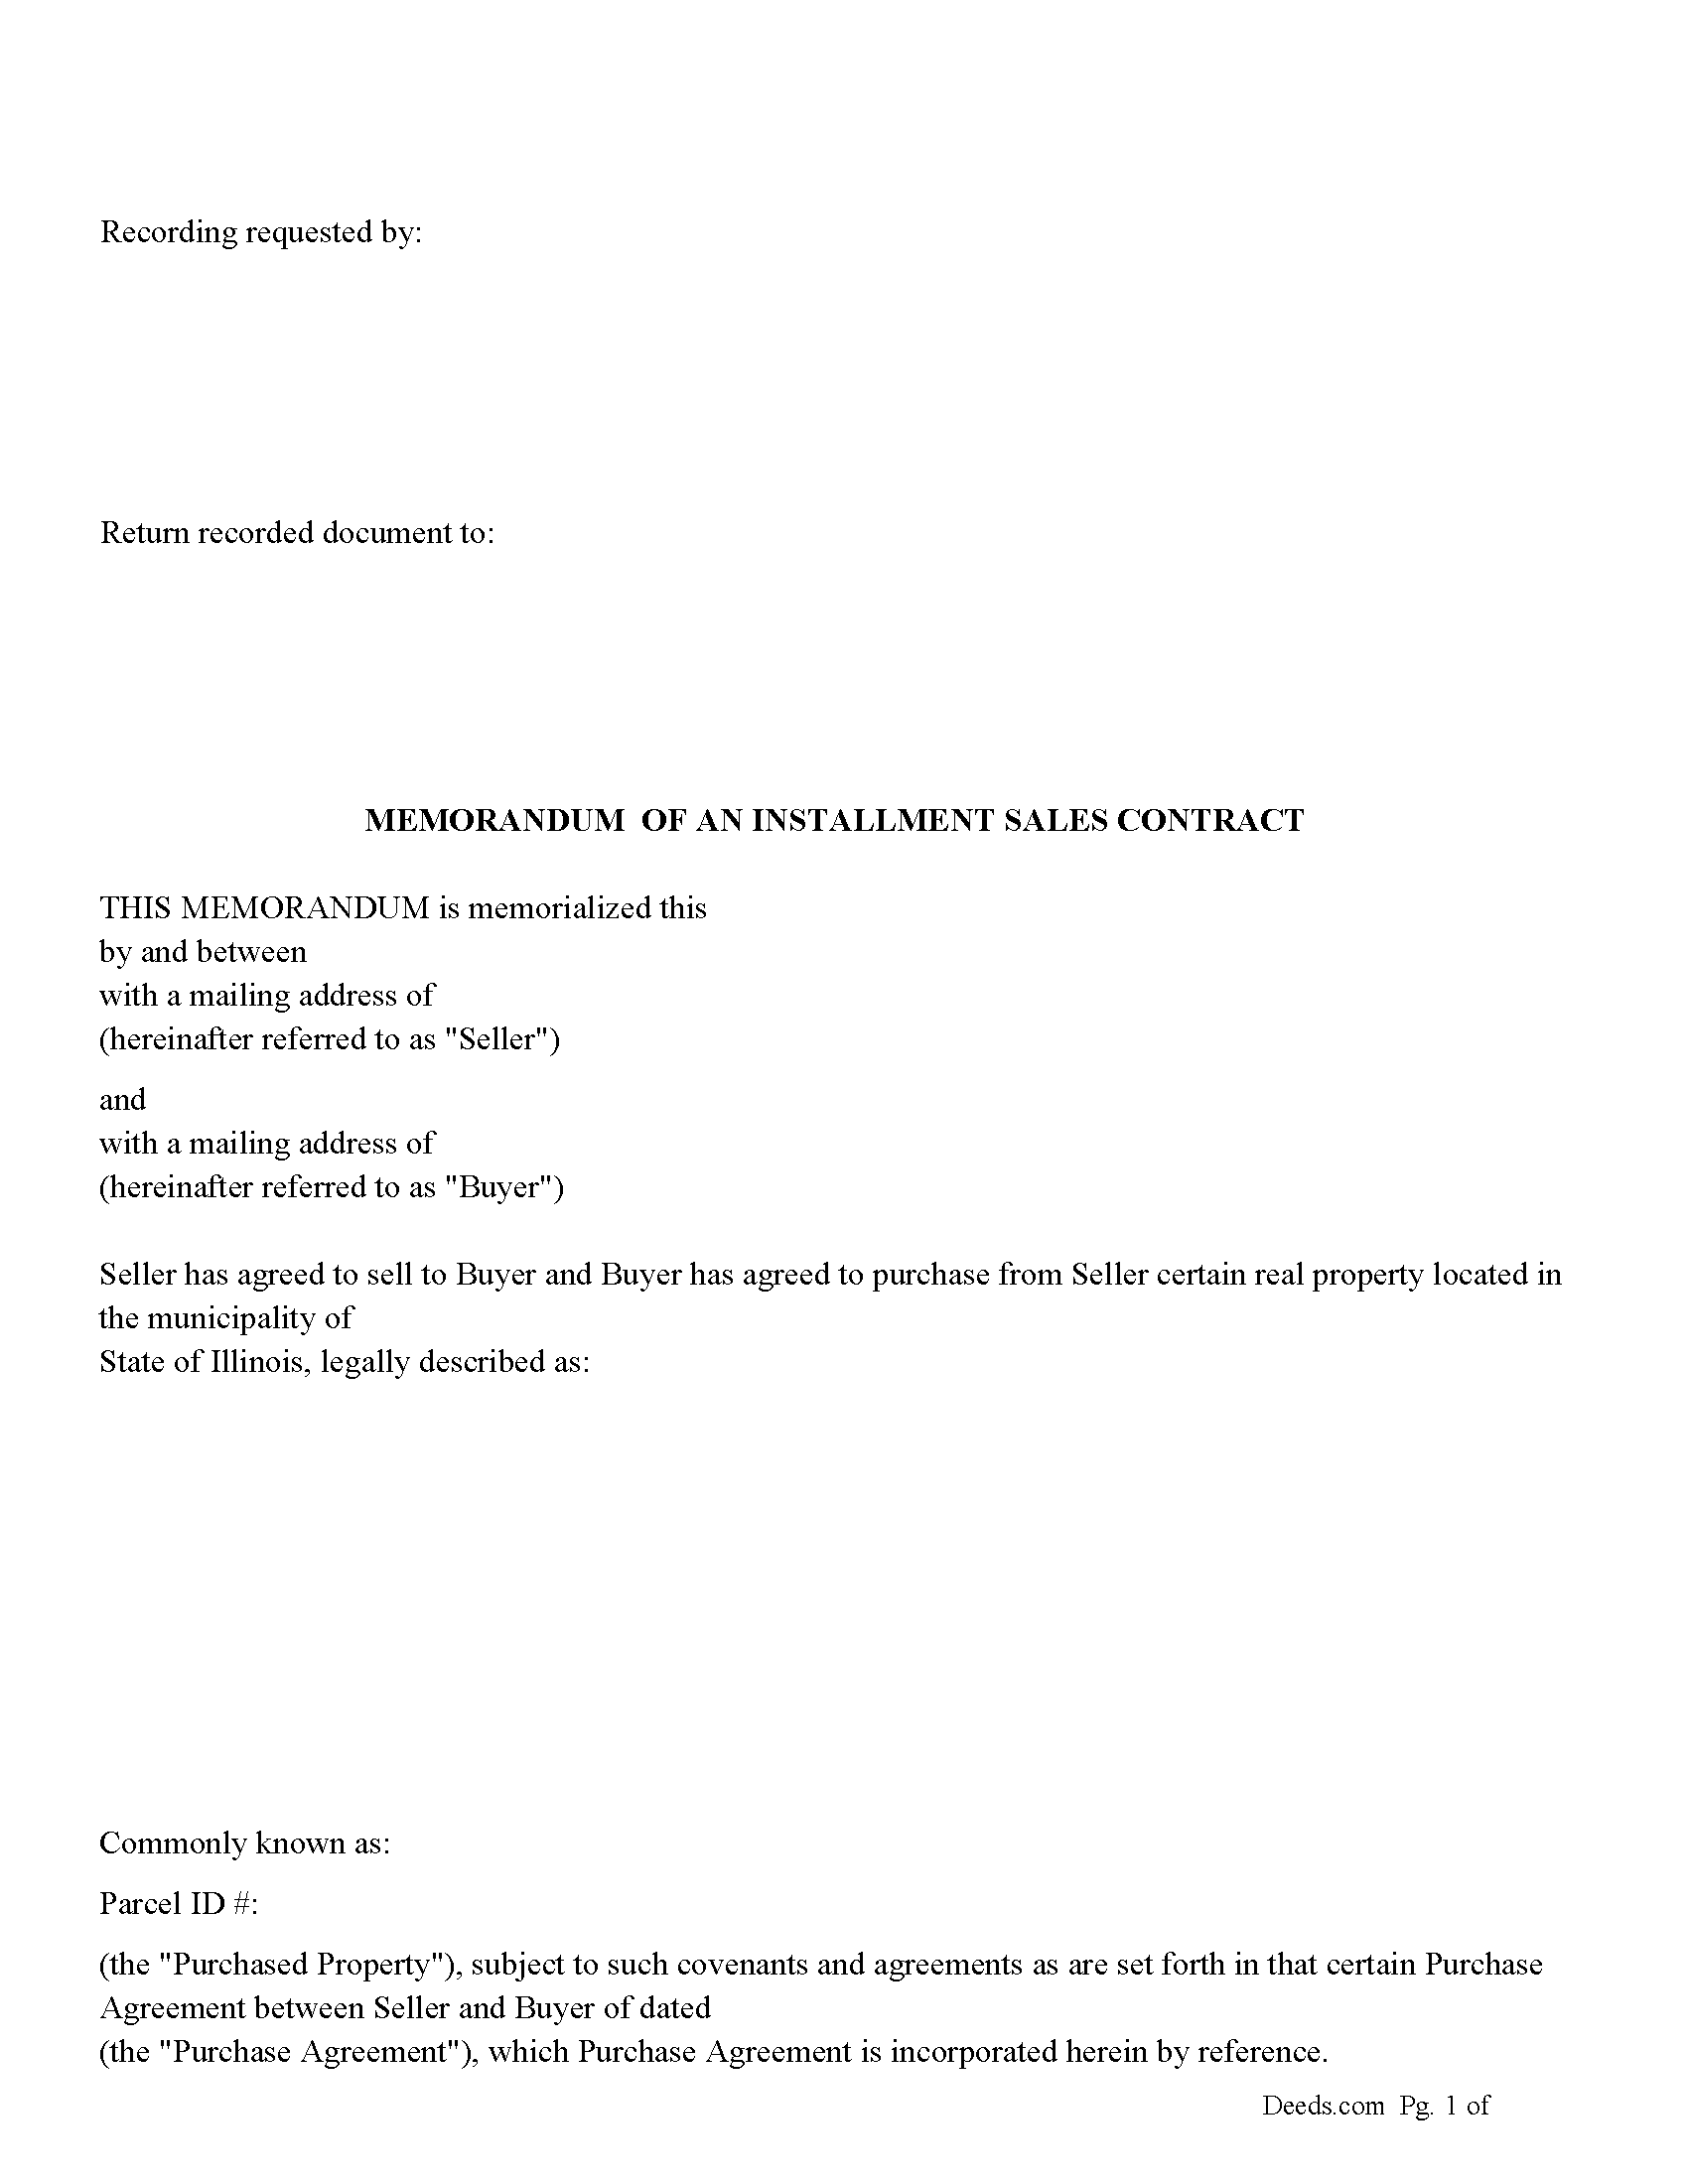 Illinois Memorandum of an Installment Sales Contract Image